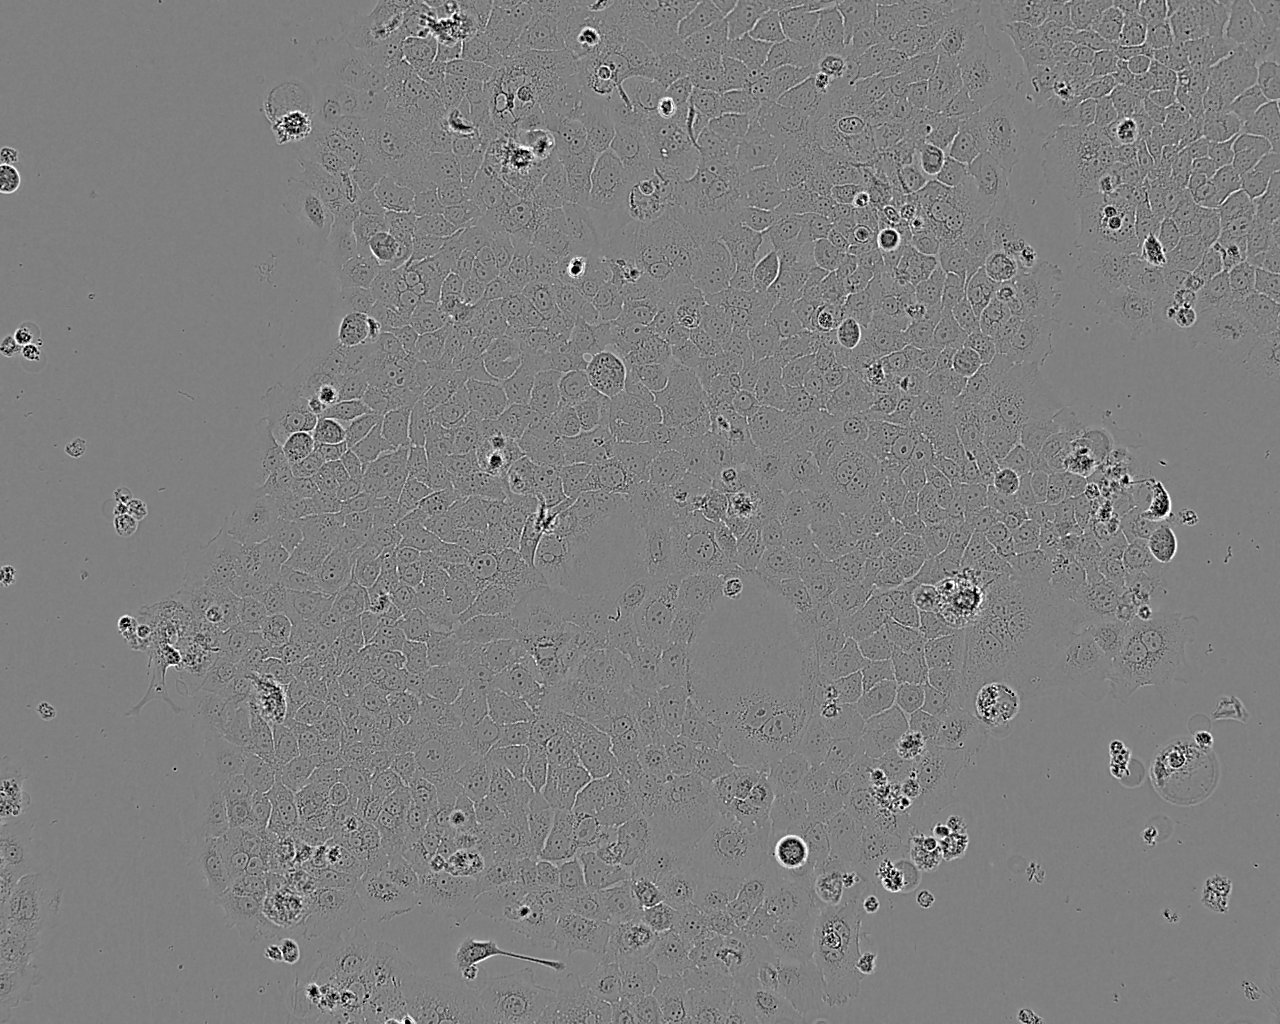 NCI-H2009 epithelioid cells人肺腺癌细胞系